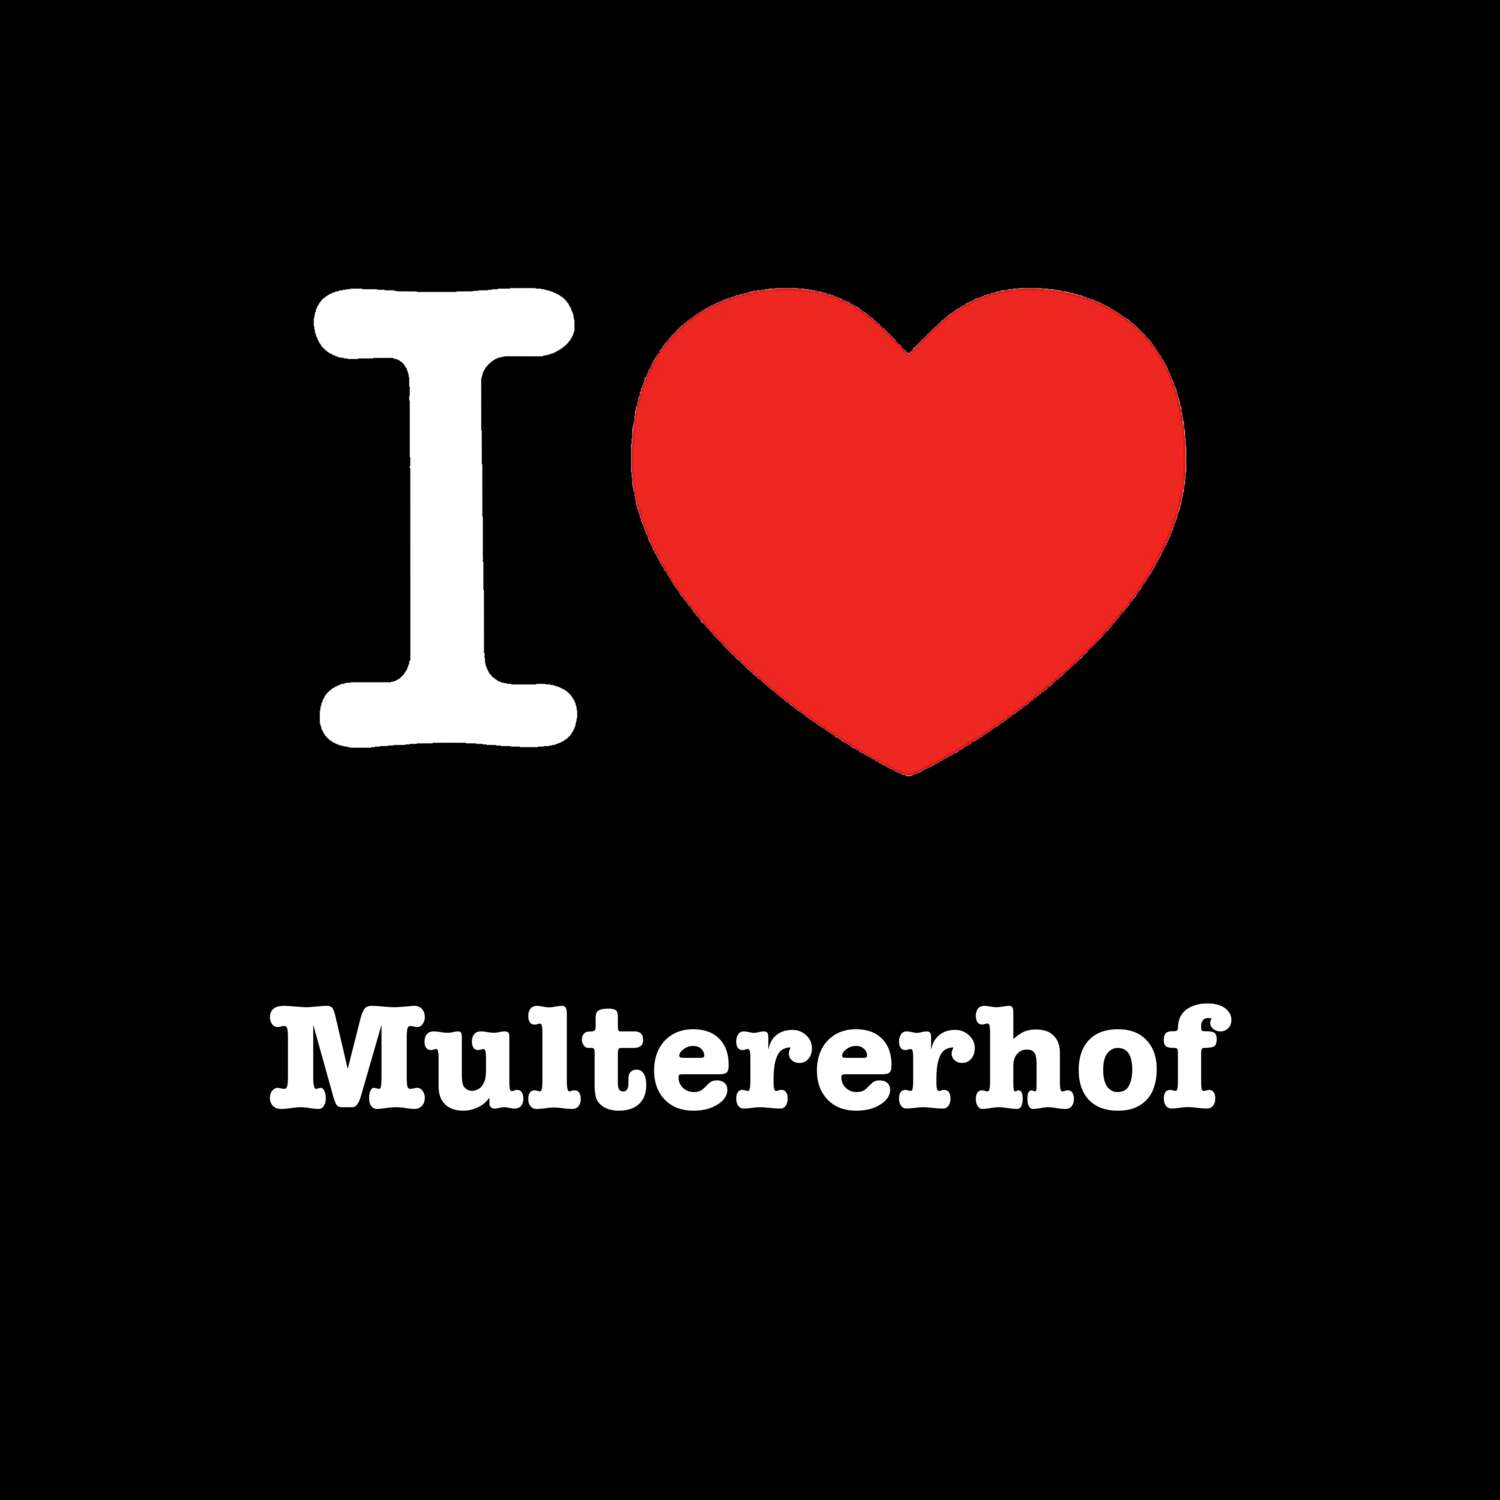 Multererhof T-Shirt »I love«